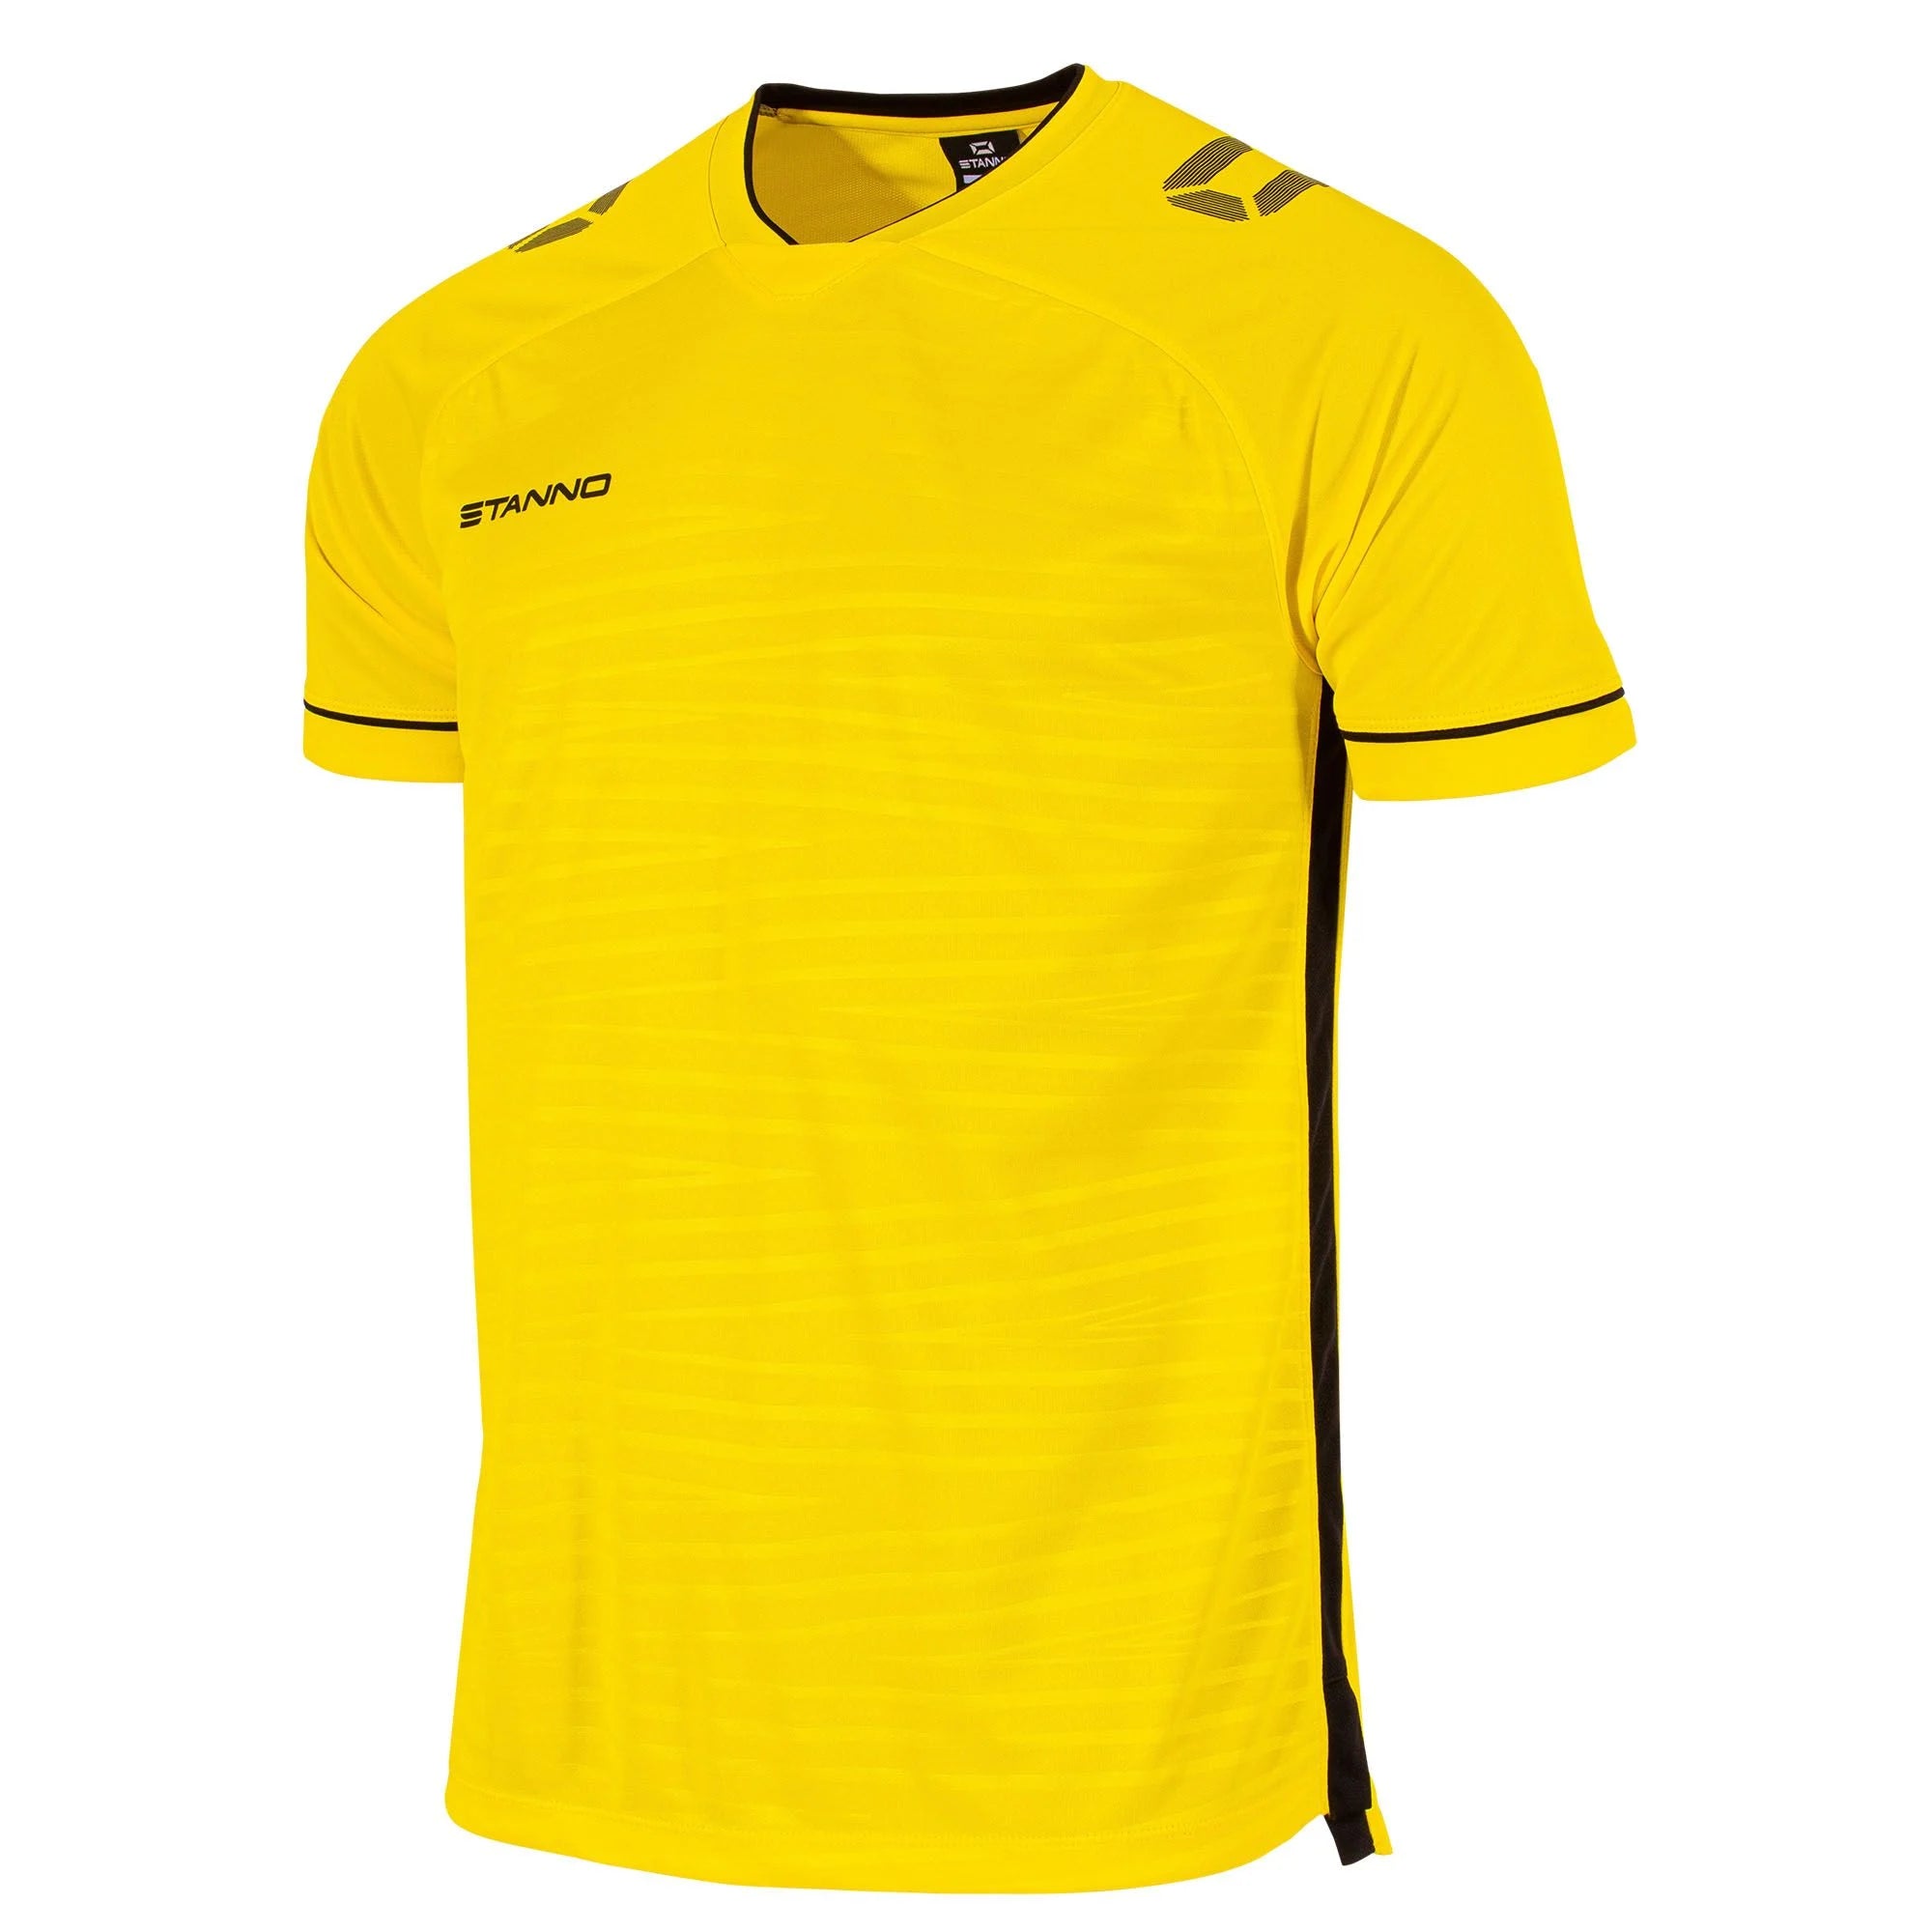 Stanno Dash Short Sleeve Shirt in Yellow/Black